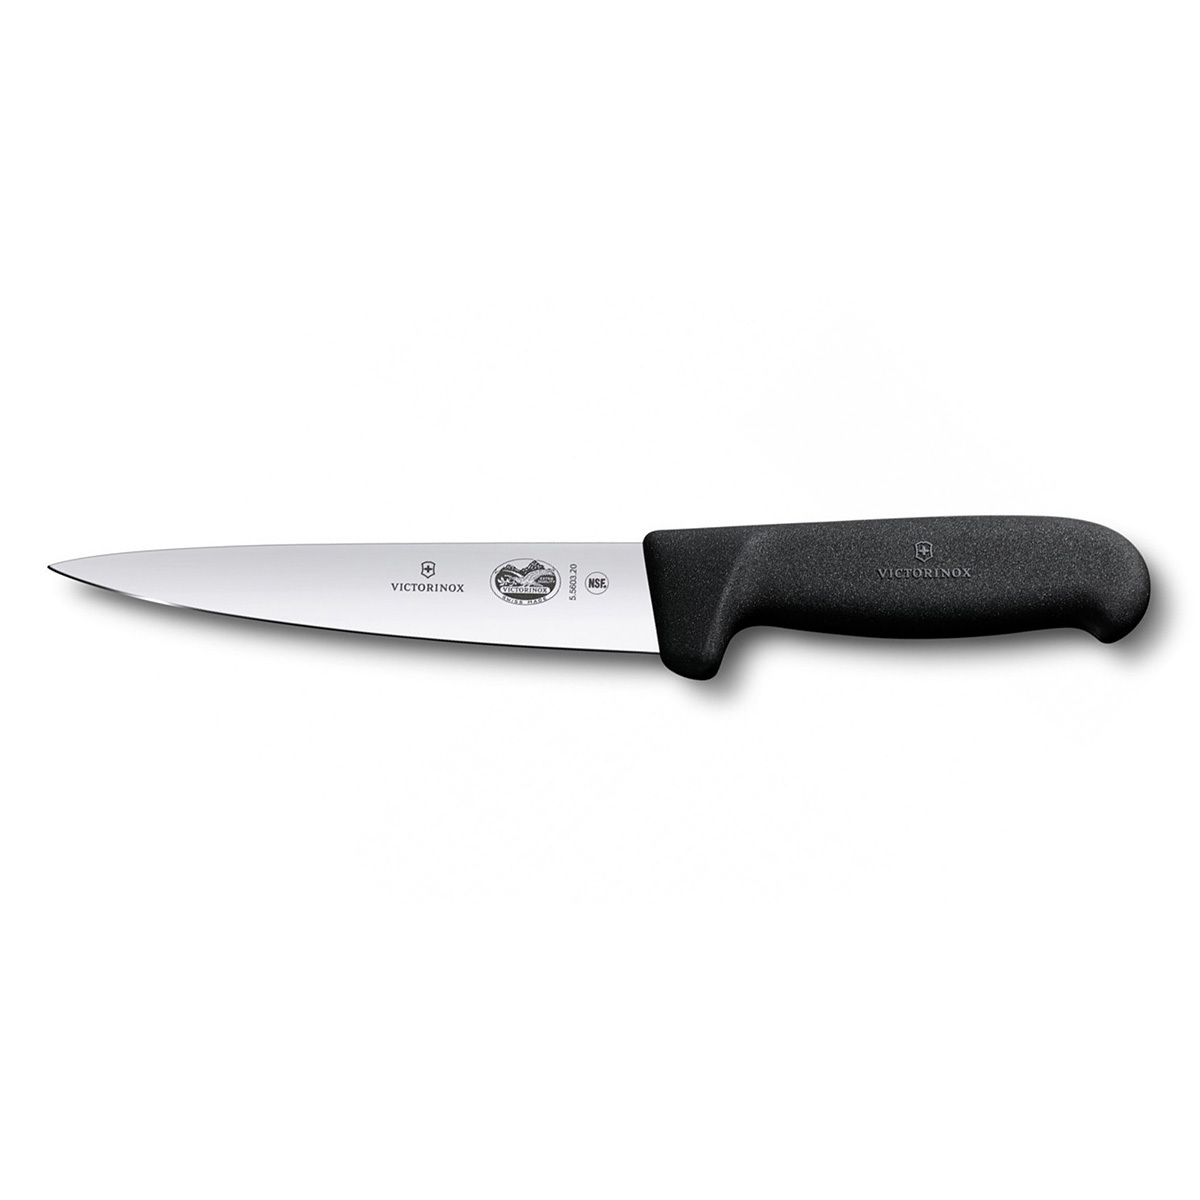 Кухонный нож Victorinox 5.5603.20 кухонный нож для сыра и масла victorinox 6 7863 13